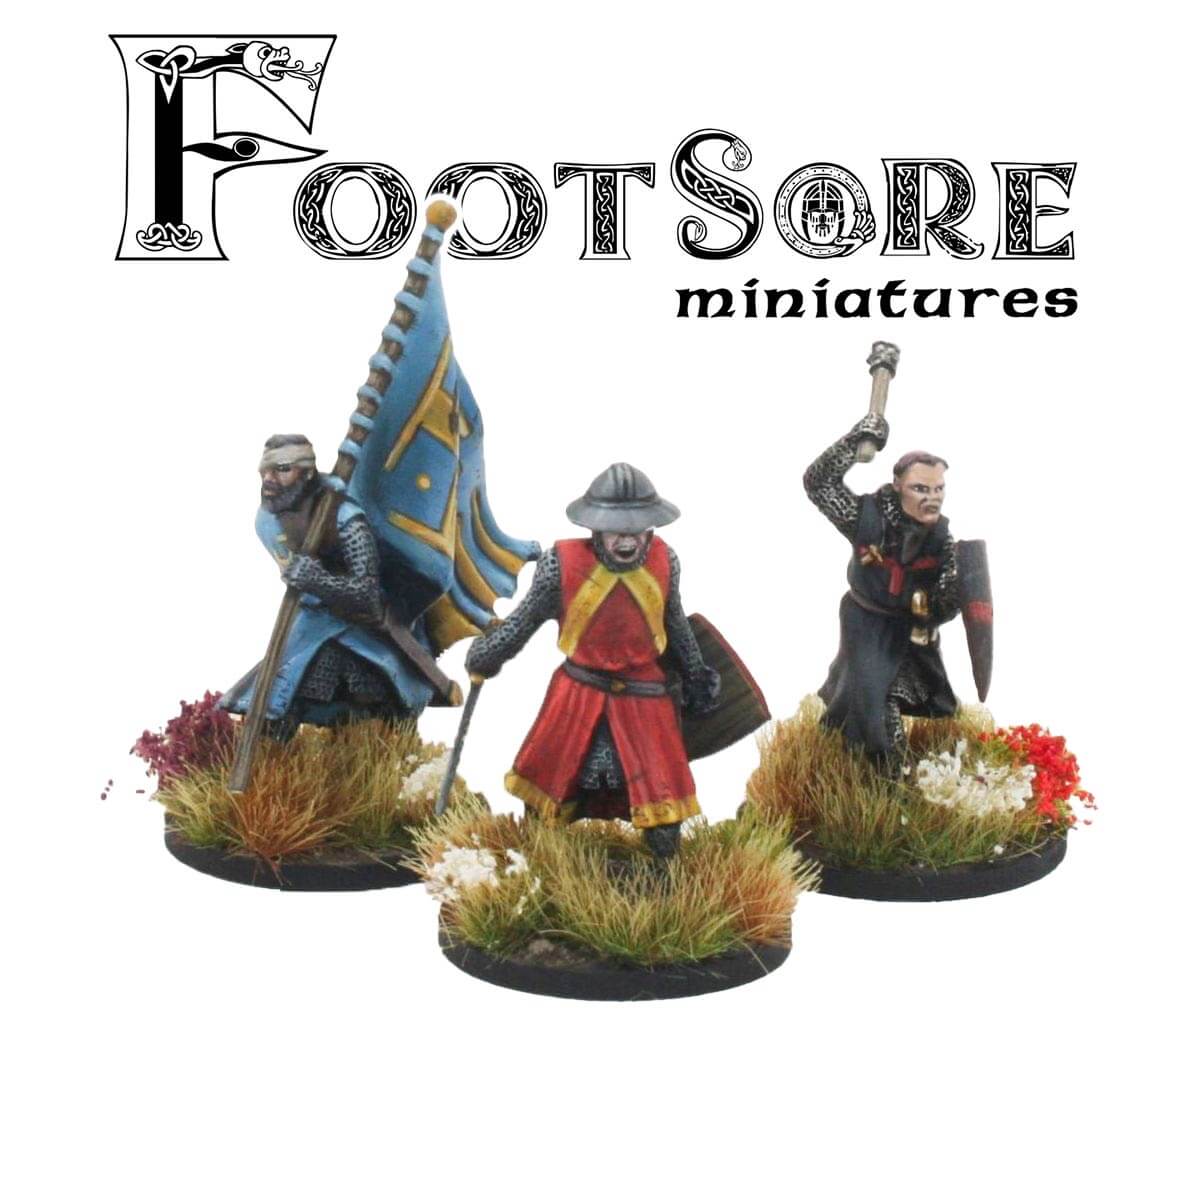 Veteran Sergeant Command Group Footsore medieval historical miniatures